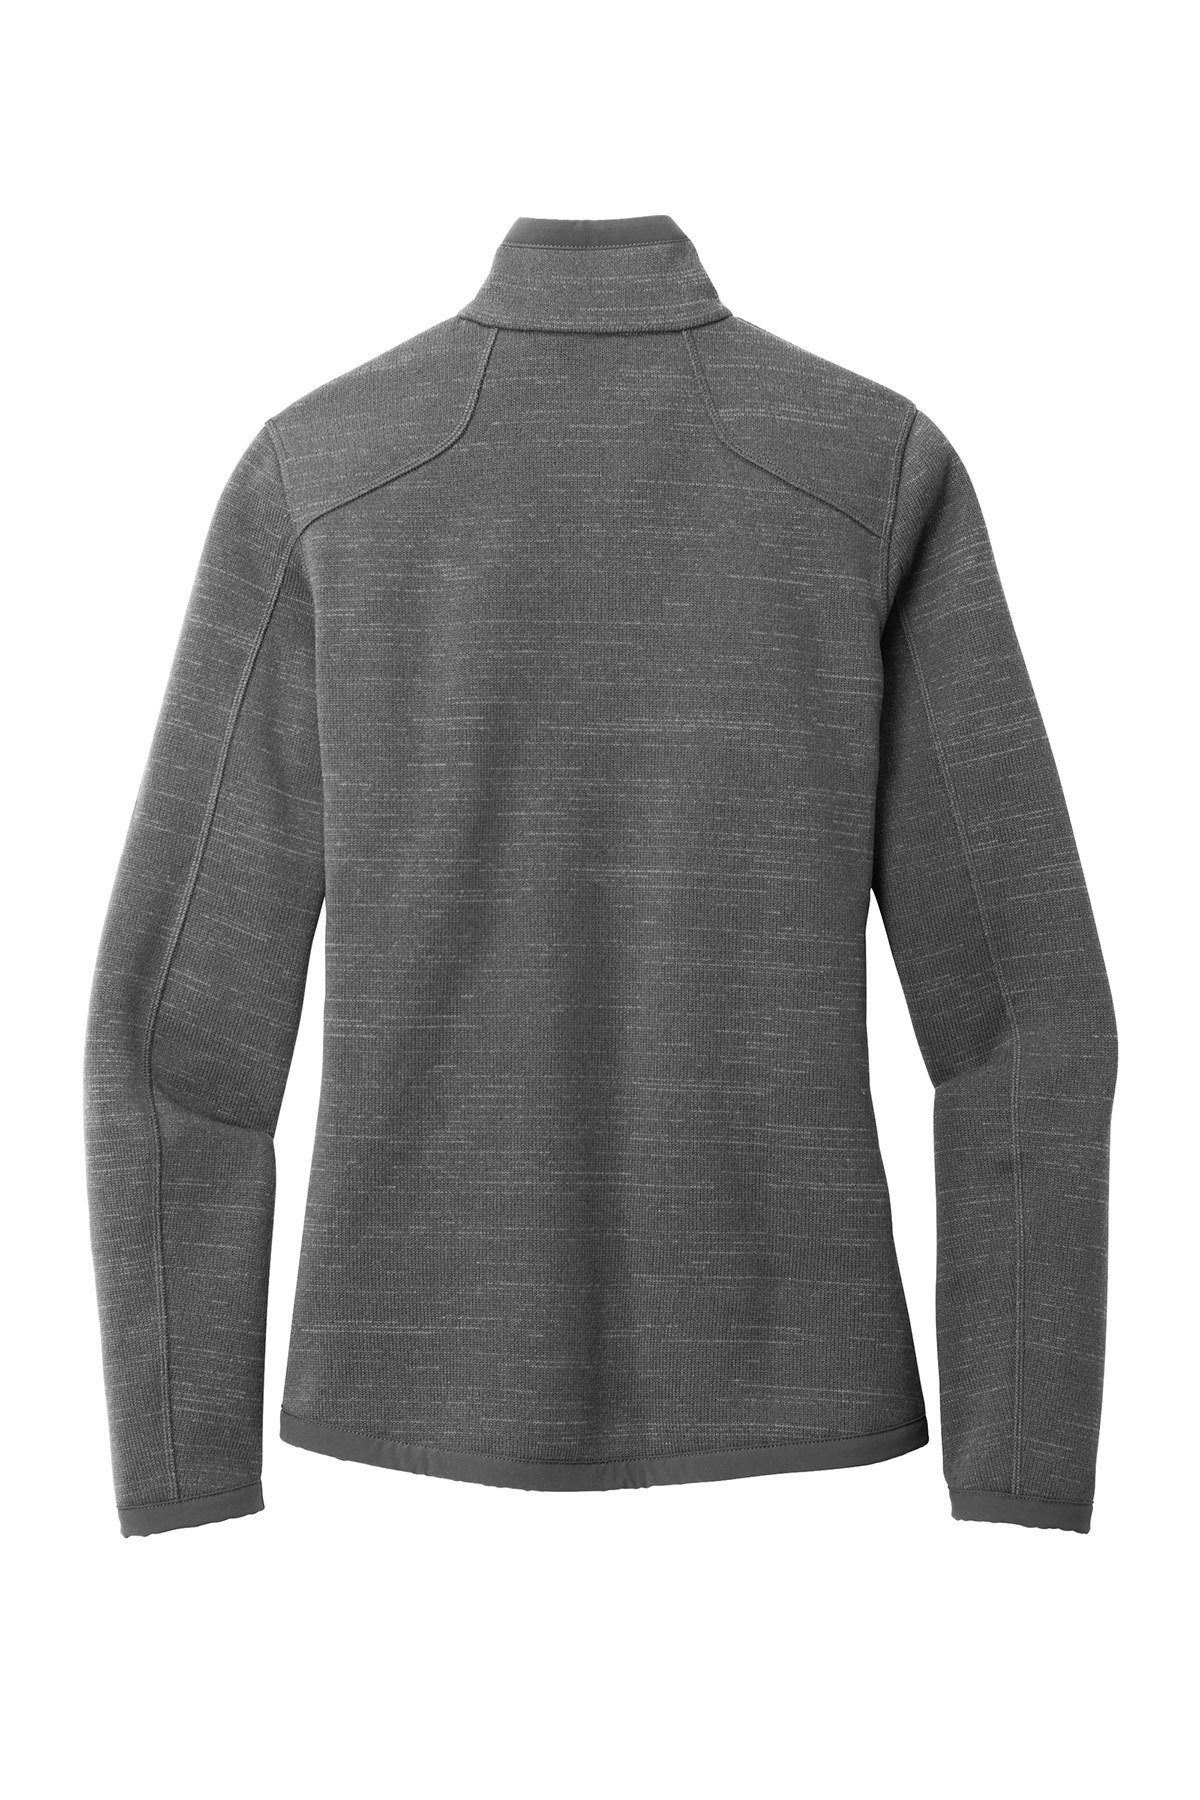 Eddie Bauer Ladies Sweater Fleece Full-Zip | Product | SanMar